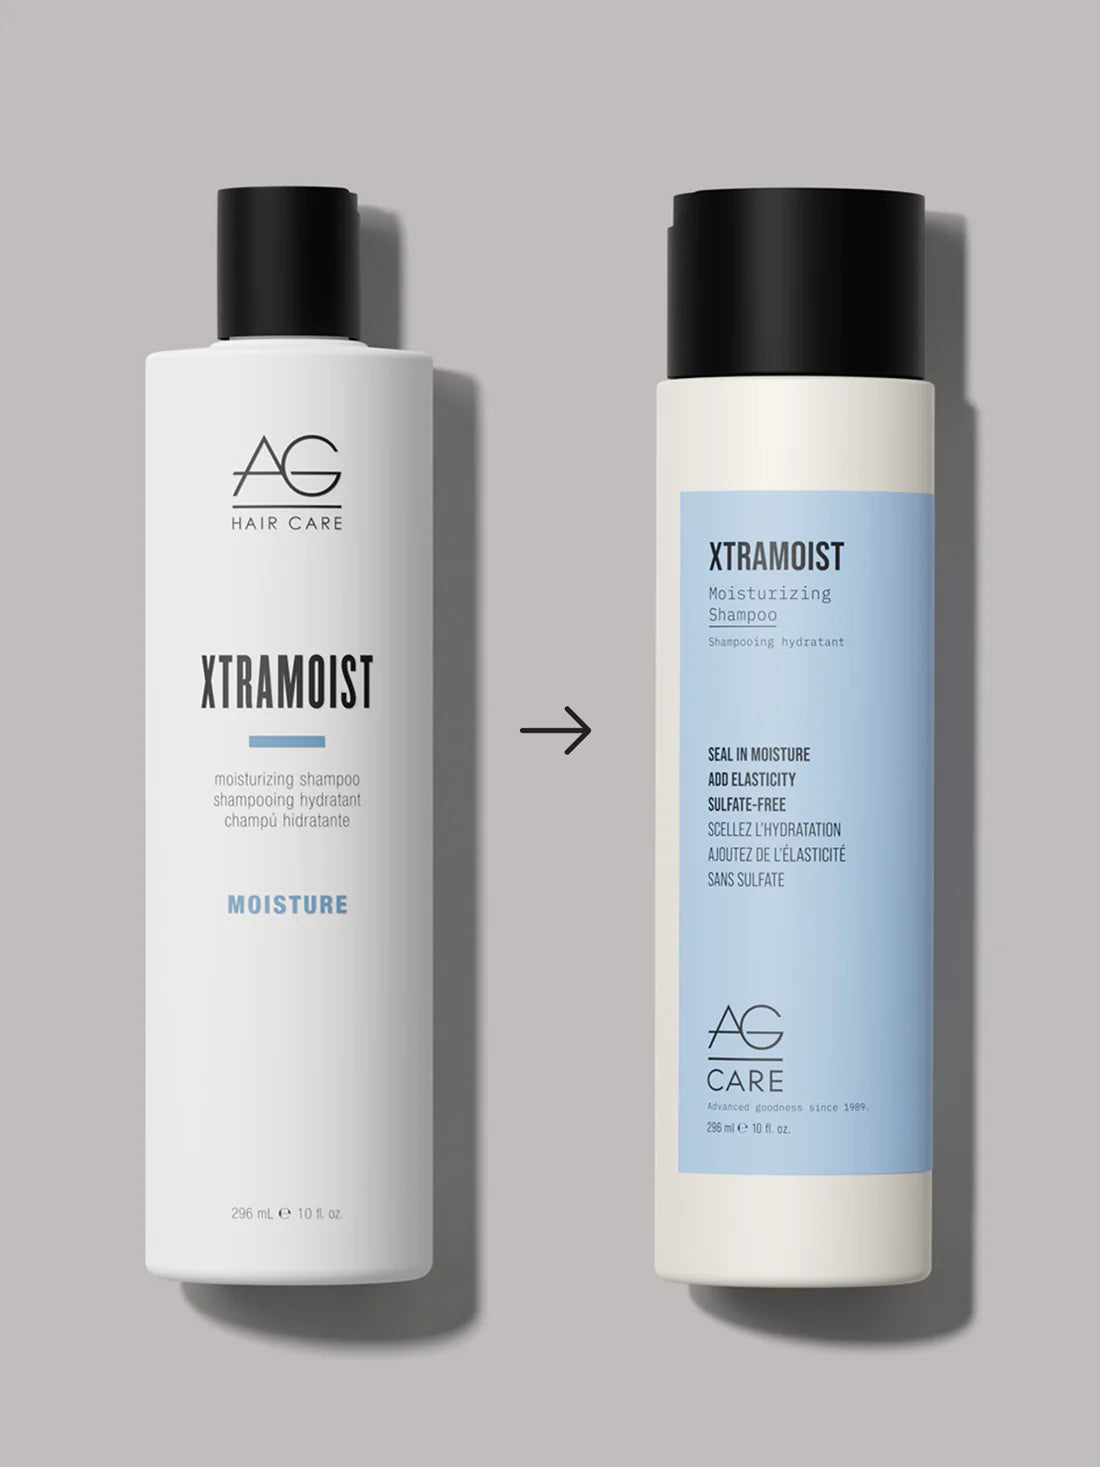 AG Care Xtramoist Moisturizing Shampoo 296 ml